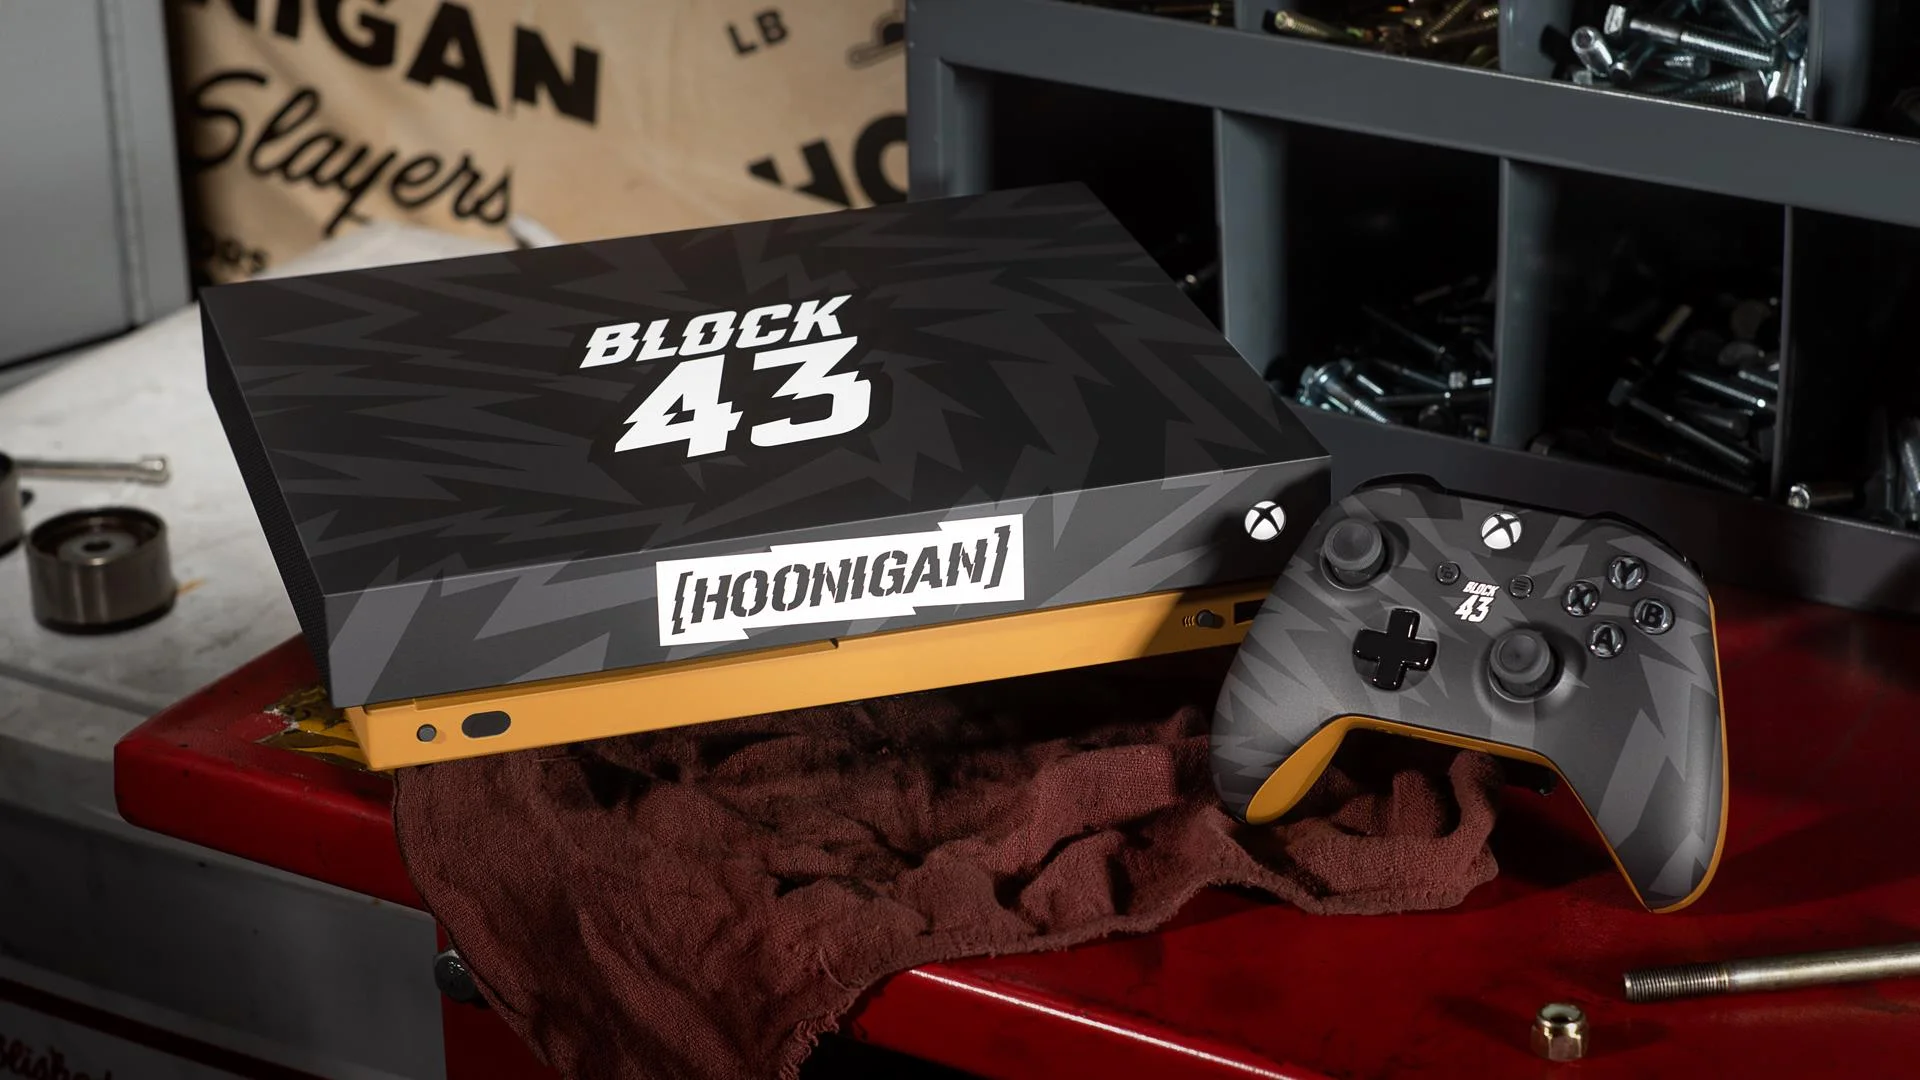  Microsoft Xbox One X Hoonigan Block 43 Black and Orange Console